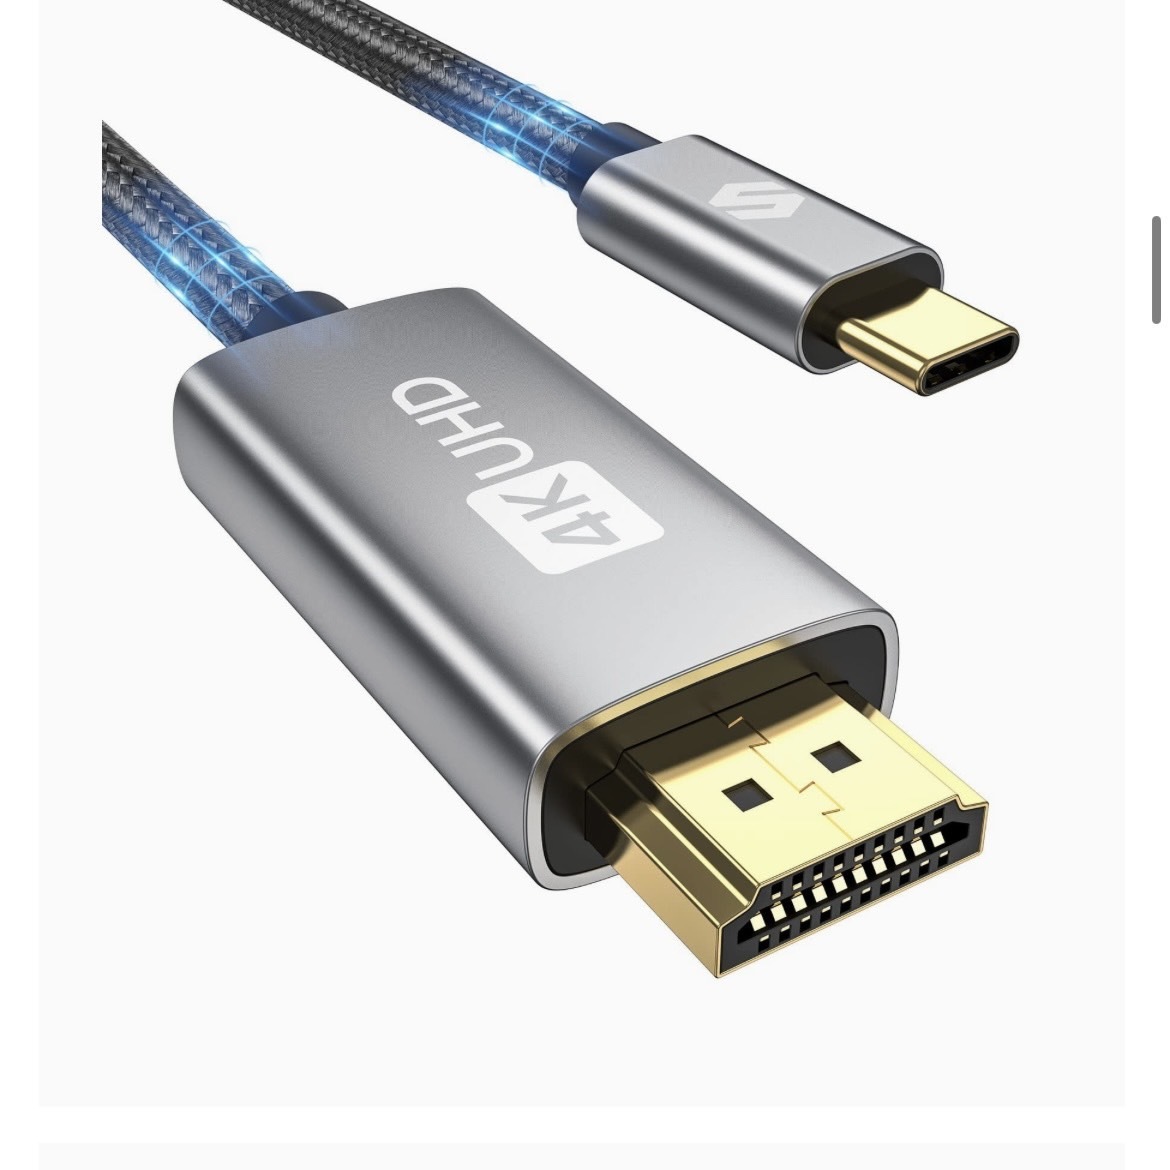 Silkland 4K USB-C HDMI ケーブル 3M Thunderbolt 3 USB C to HDMI 映像出力 USBC HDMI 変換ケーブル USB-C & HDMI ケーブル タイプC_画像1